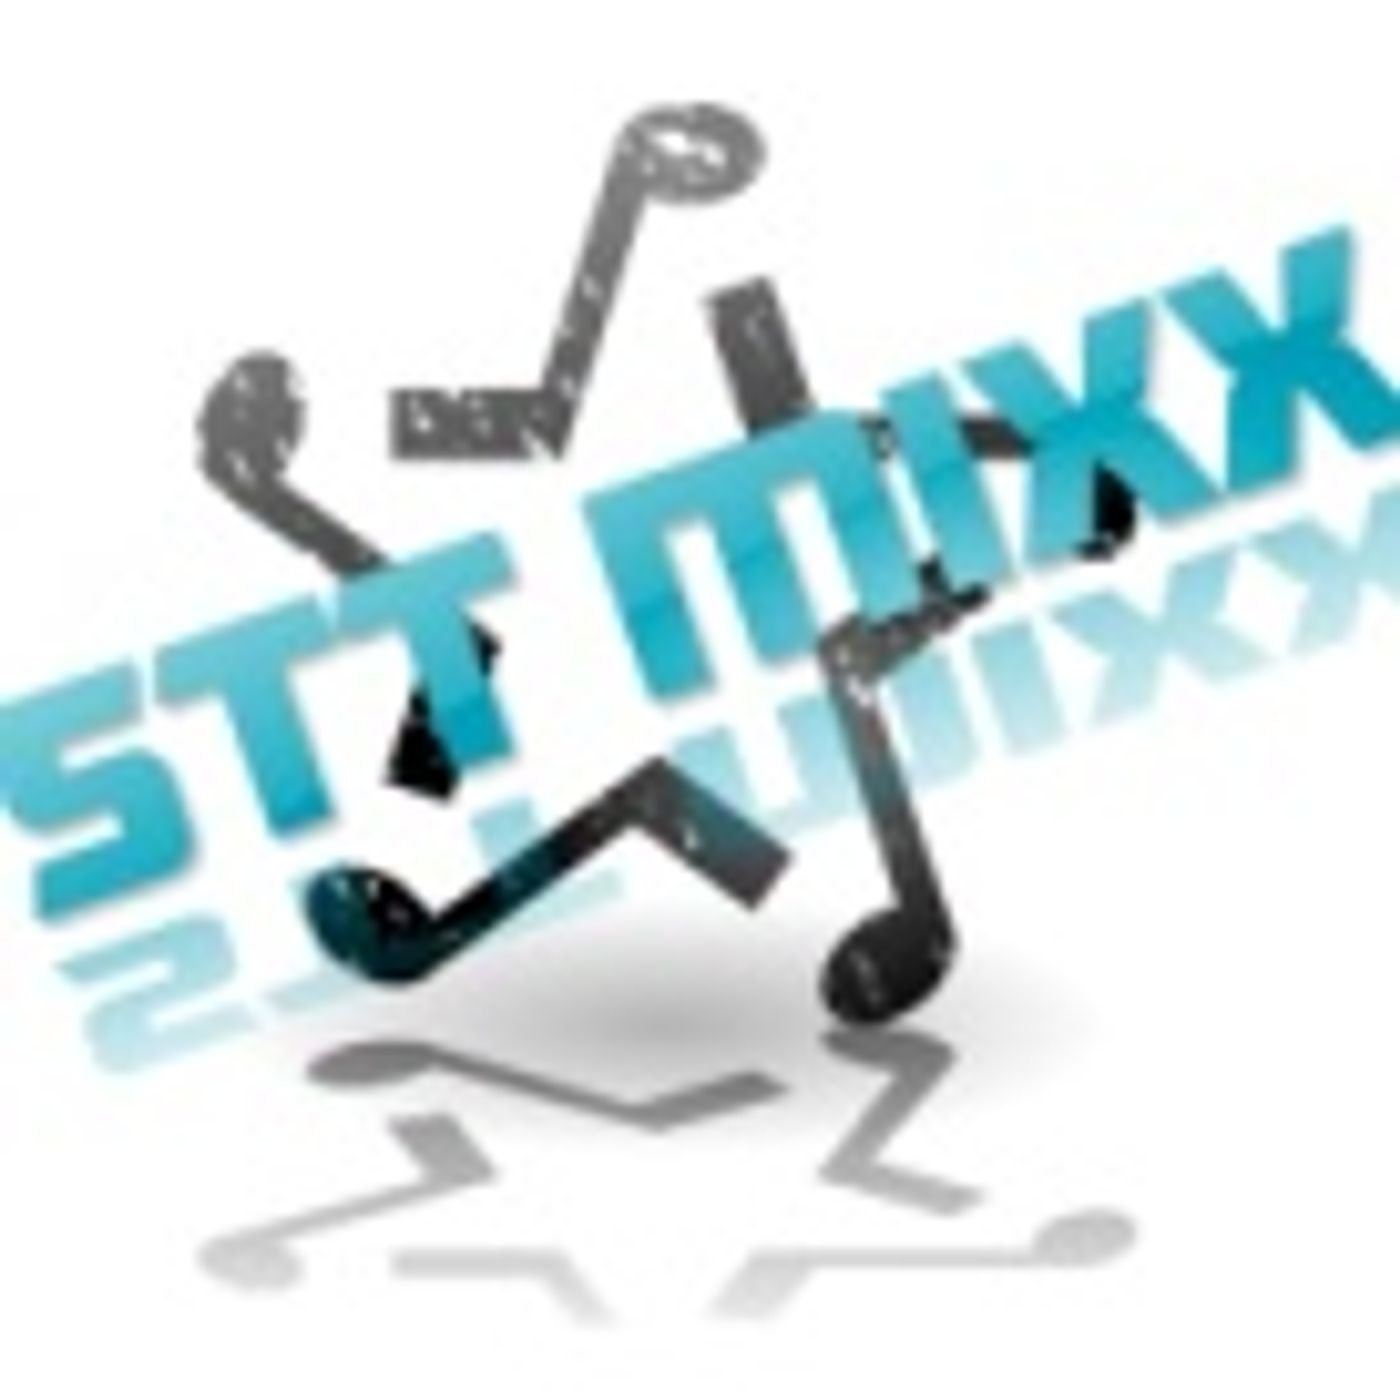 STTMIXX's tracks